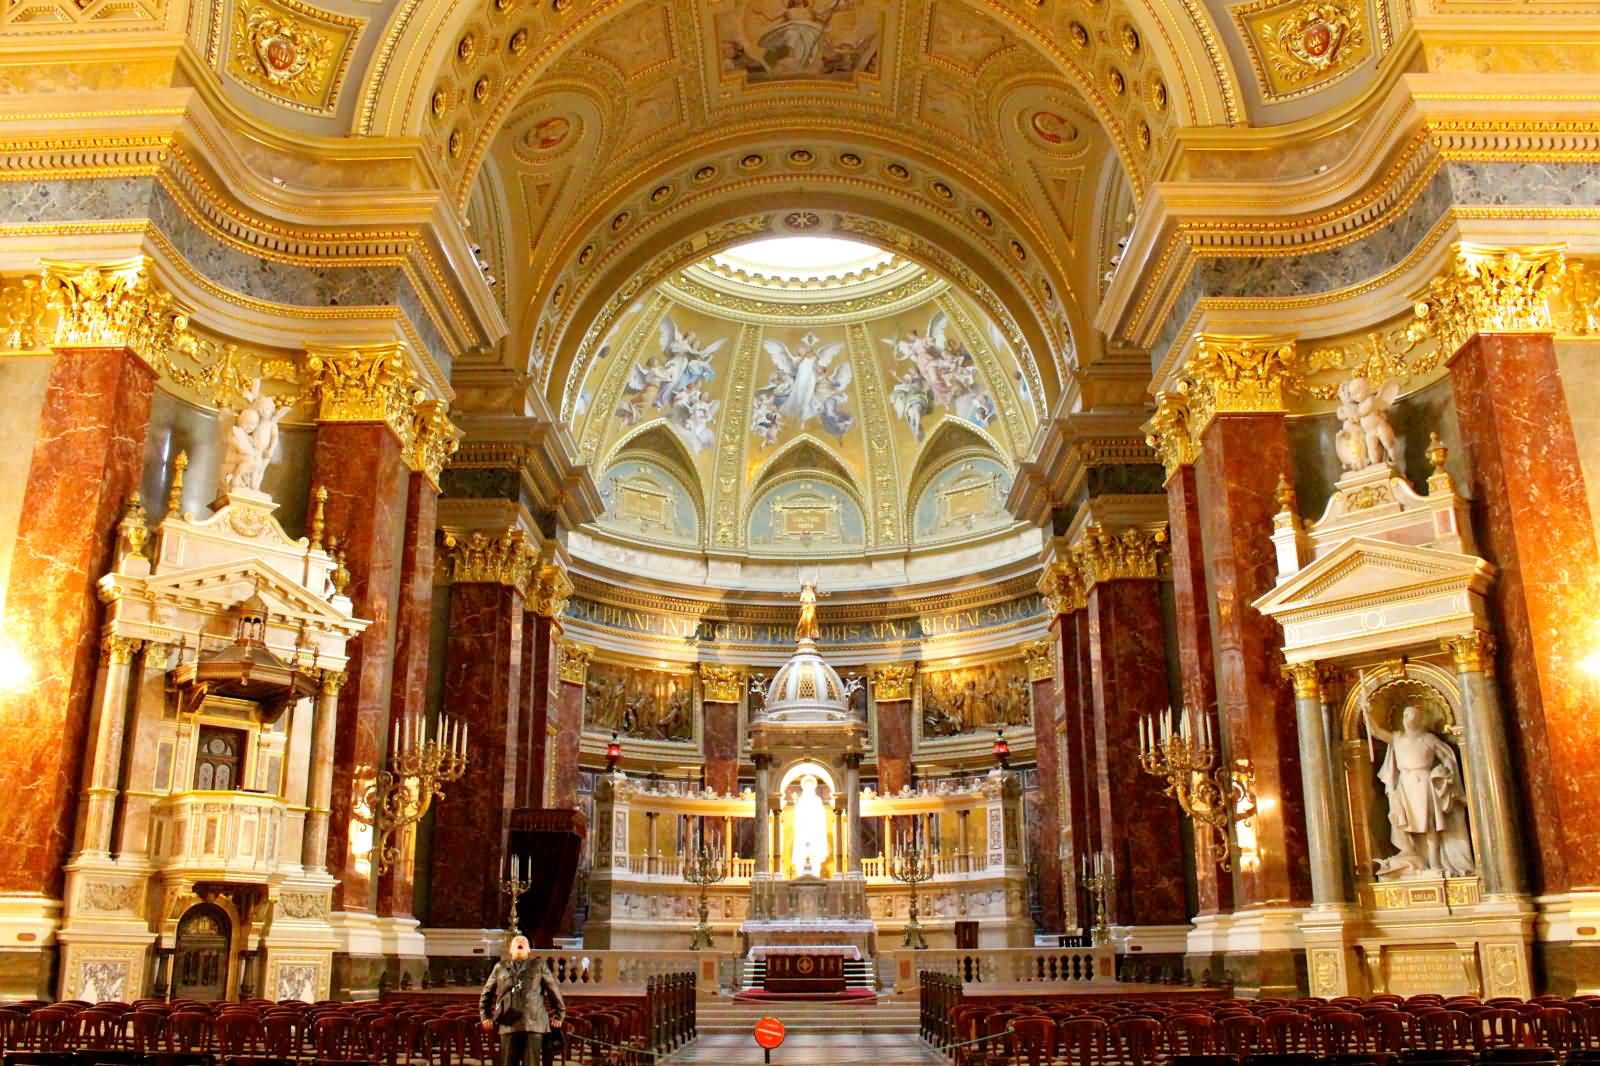 St. Stephen’s Basilica Inside View